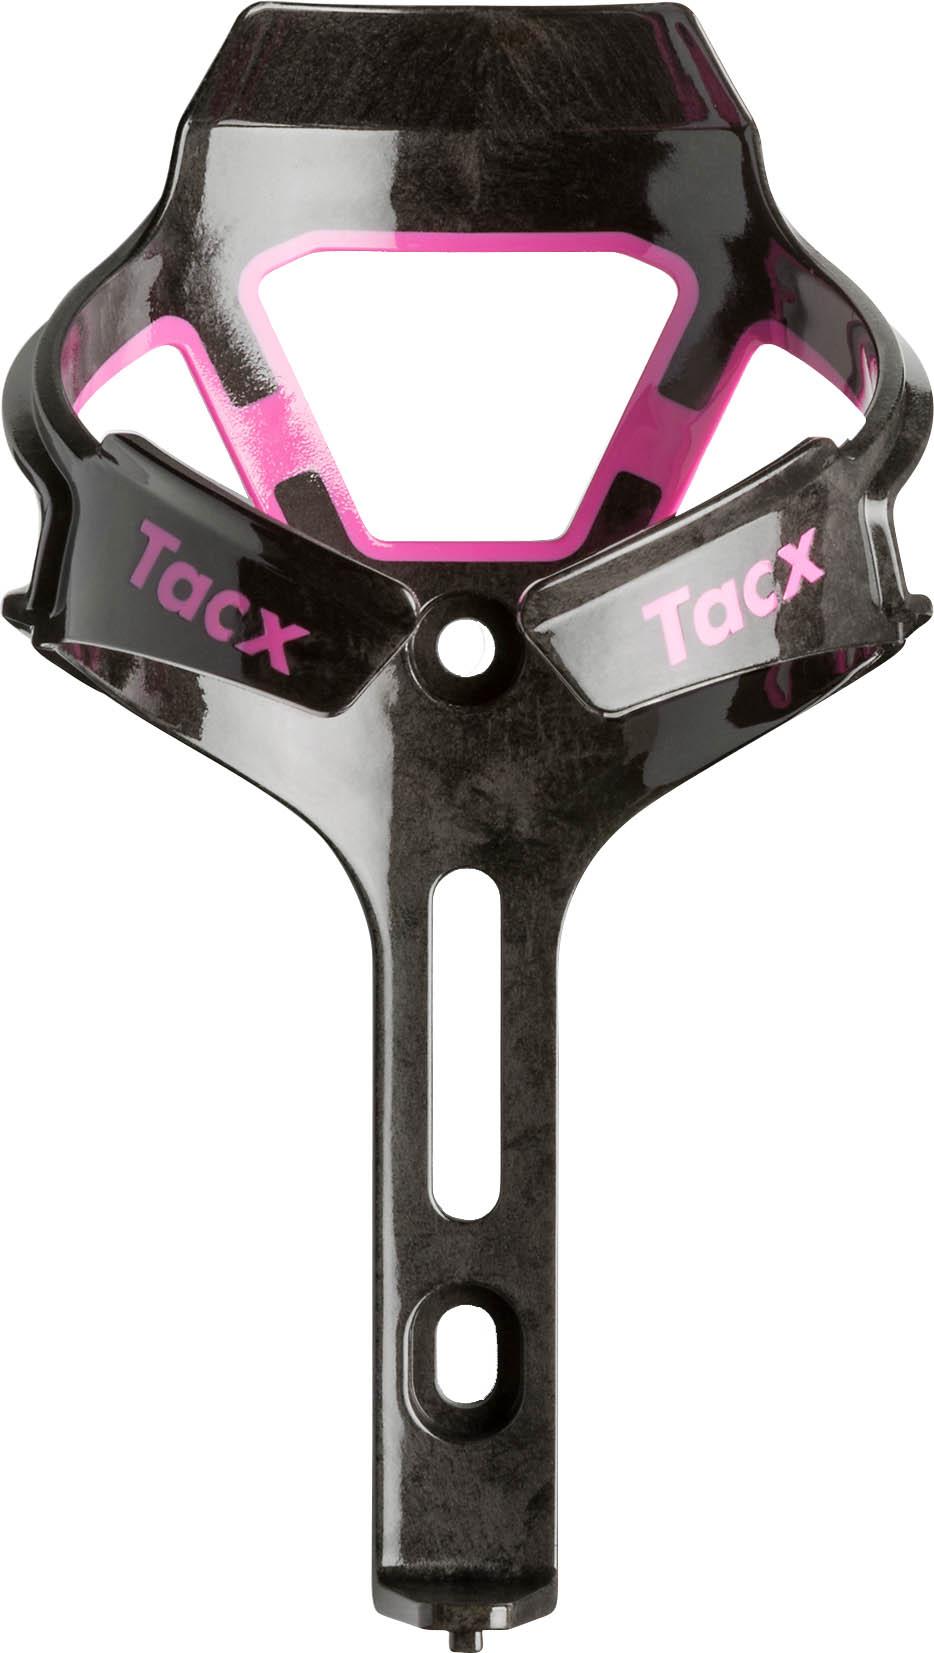 Tacx Ciro Bike Bottle Cage  Pink